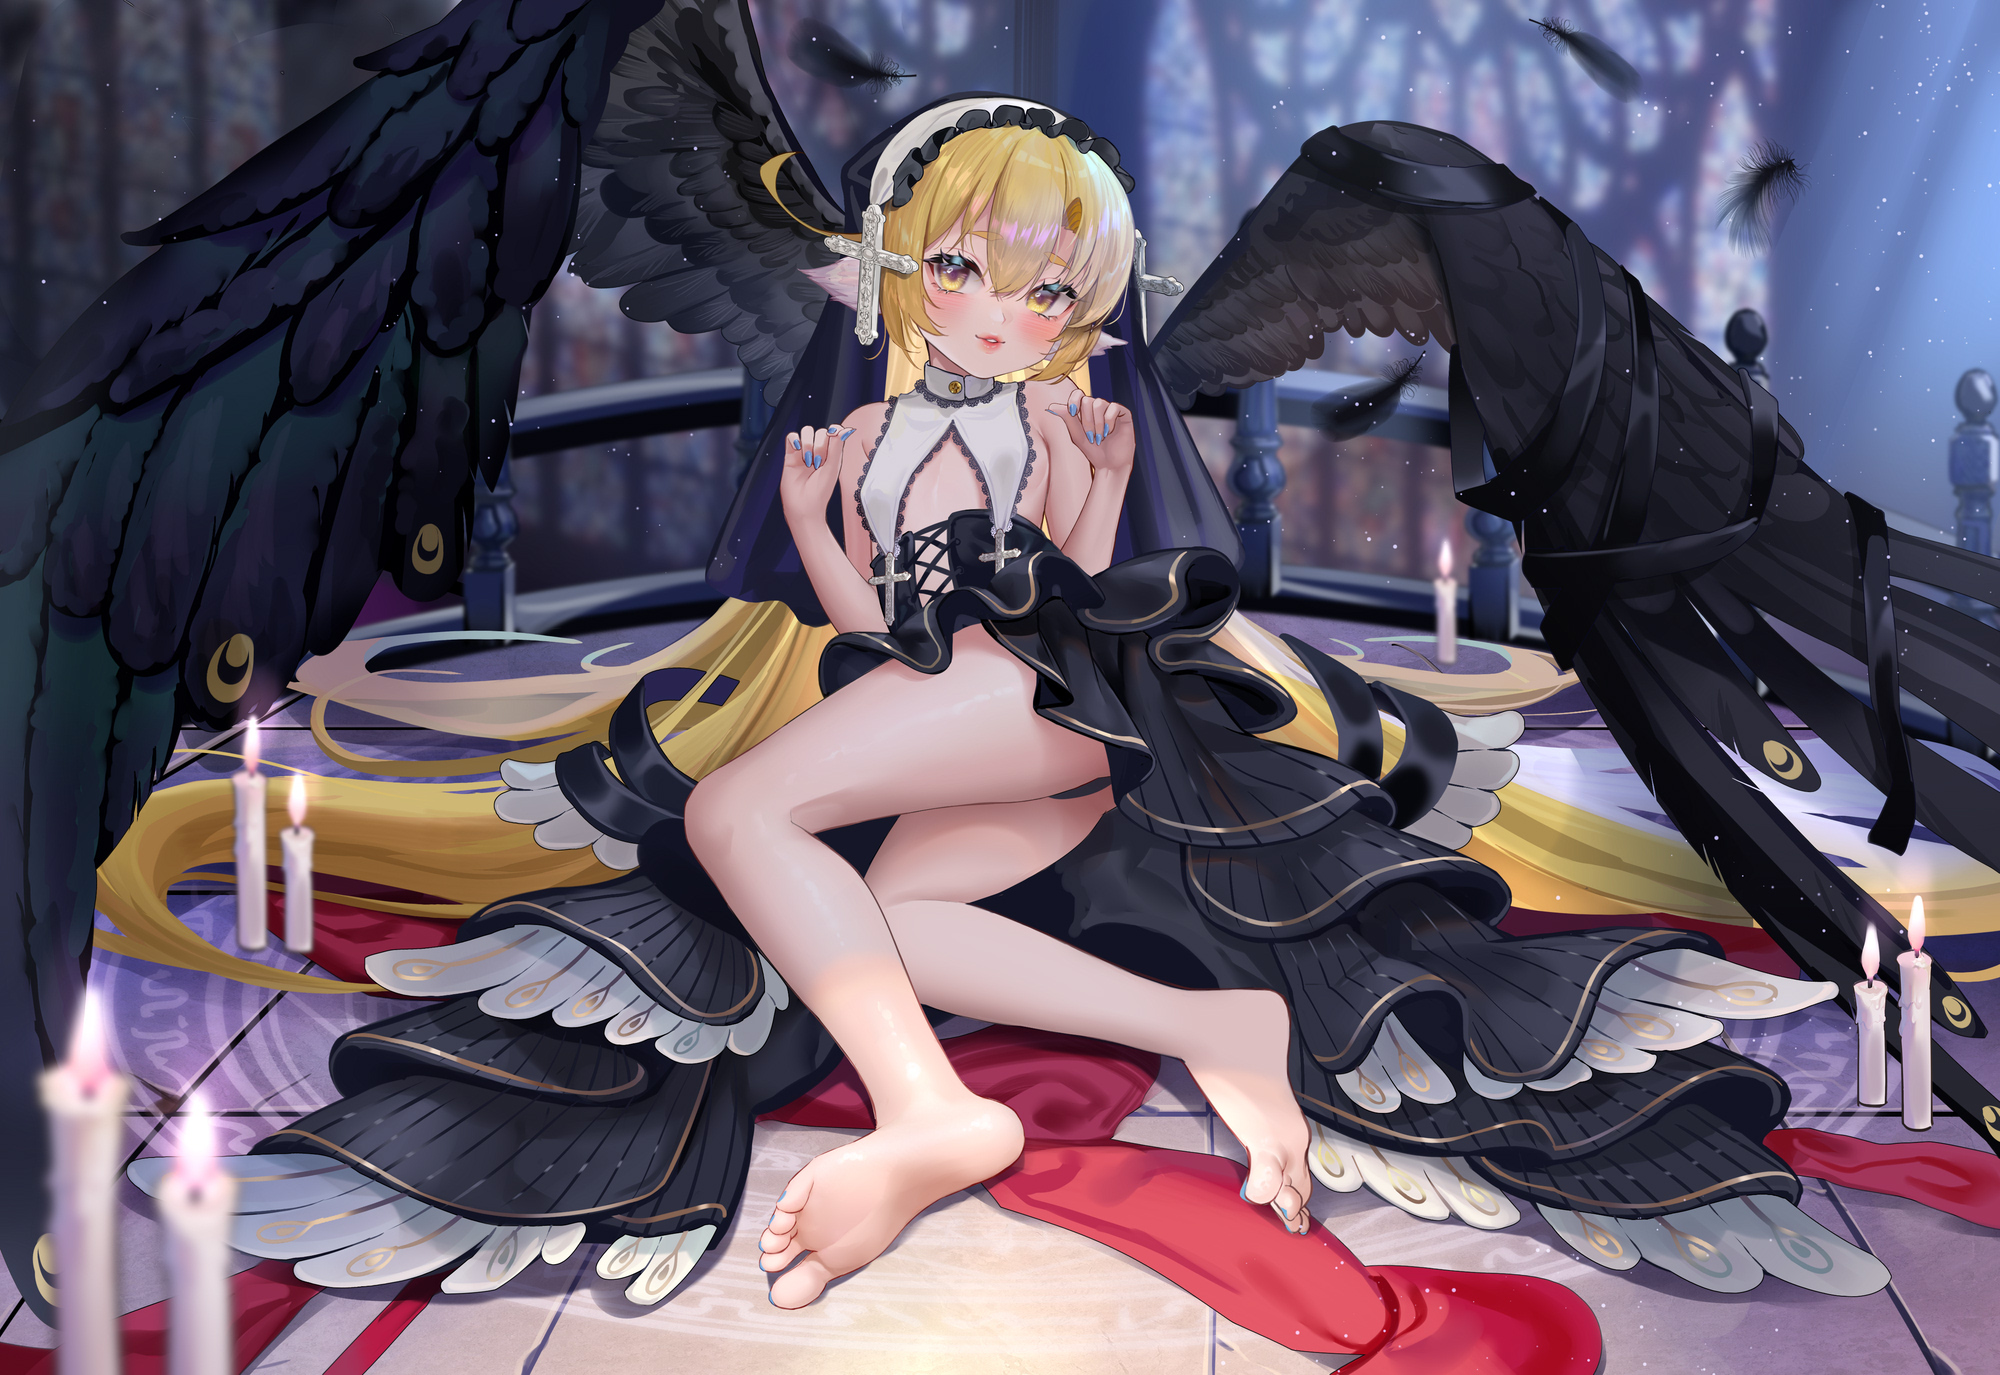 Anime 2000x1375 anime anime girls barefoot blonde wings yellow eyes cyan nails fantasy art fantasy girl candles legs dark angel angel wings feet